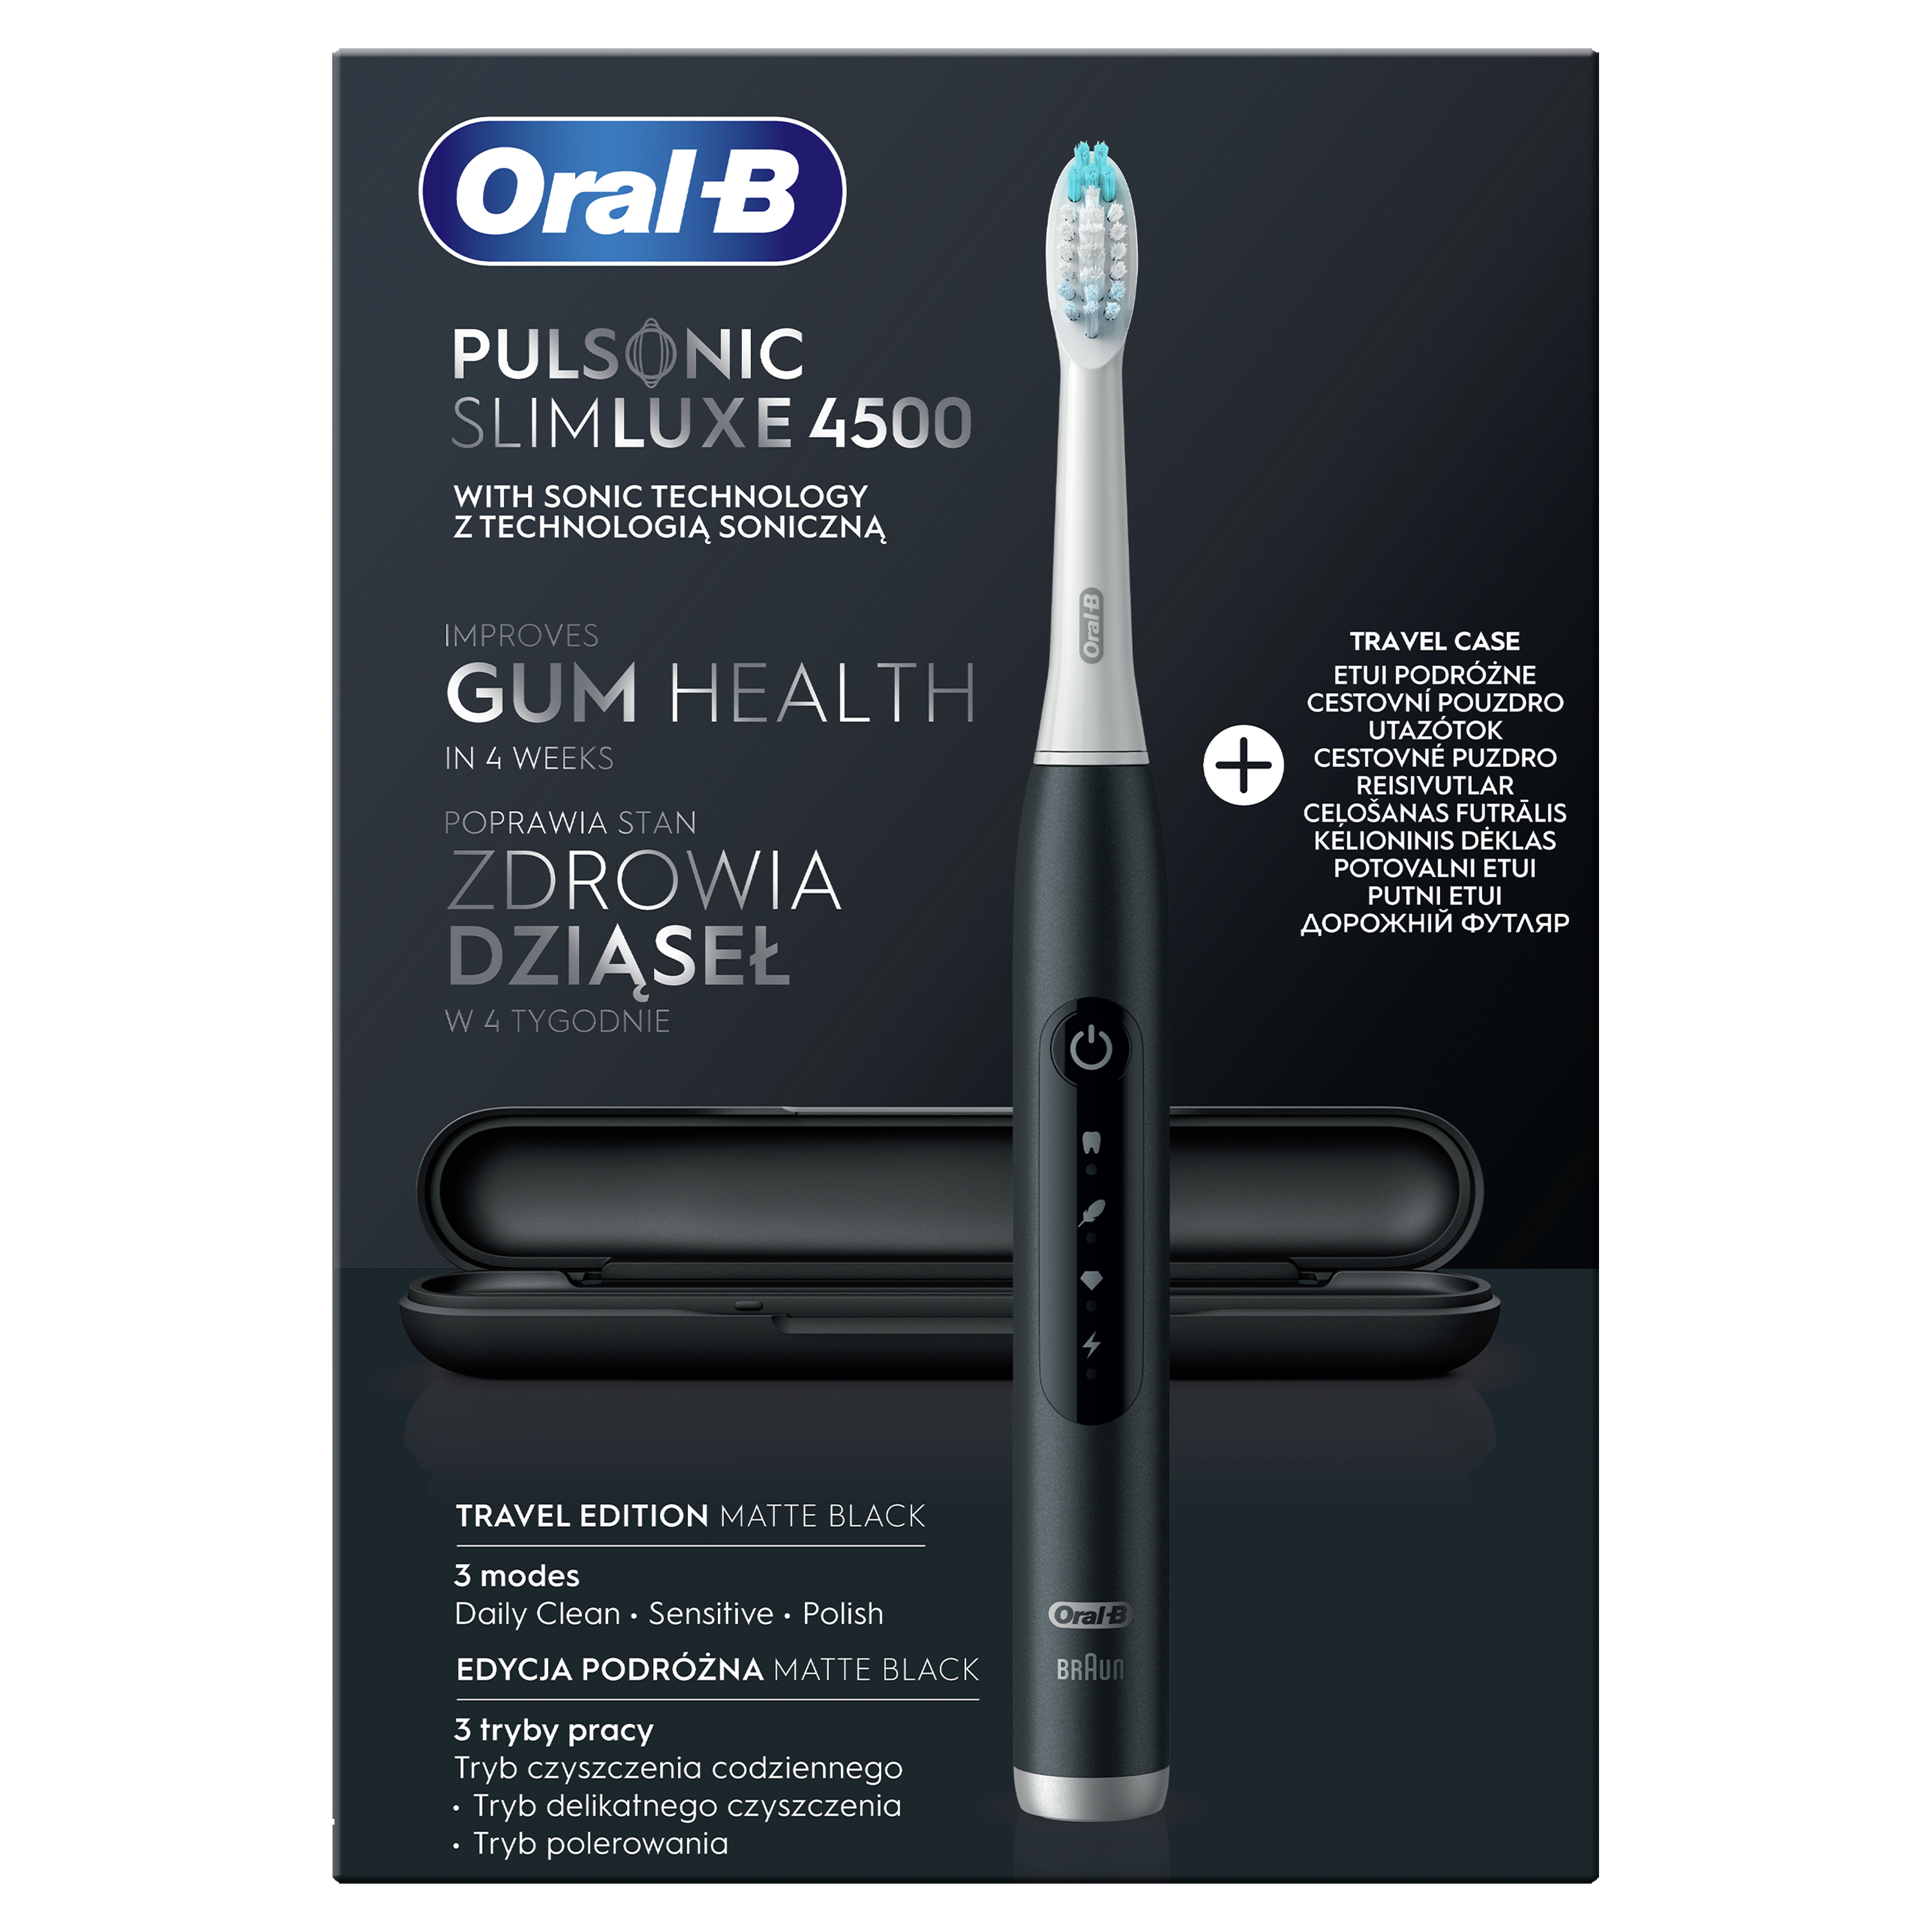 Электрическая звуковая зубная щётка Oral-B Pulsonic Slim Luxe 4500 + футляр, черная - фото 2